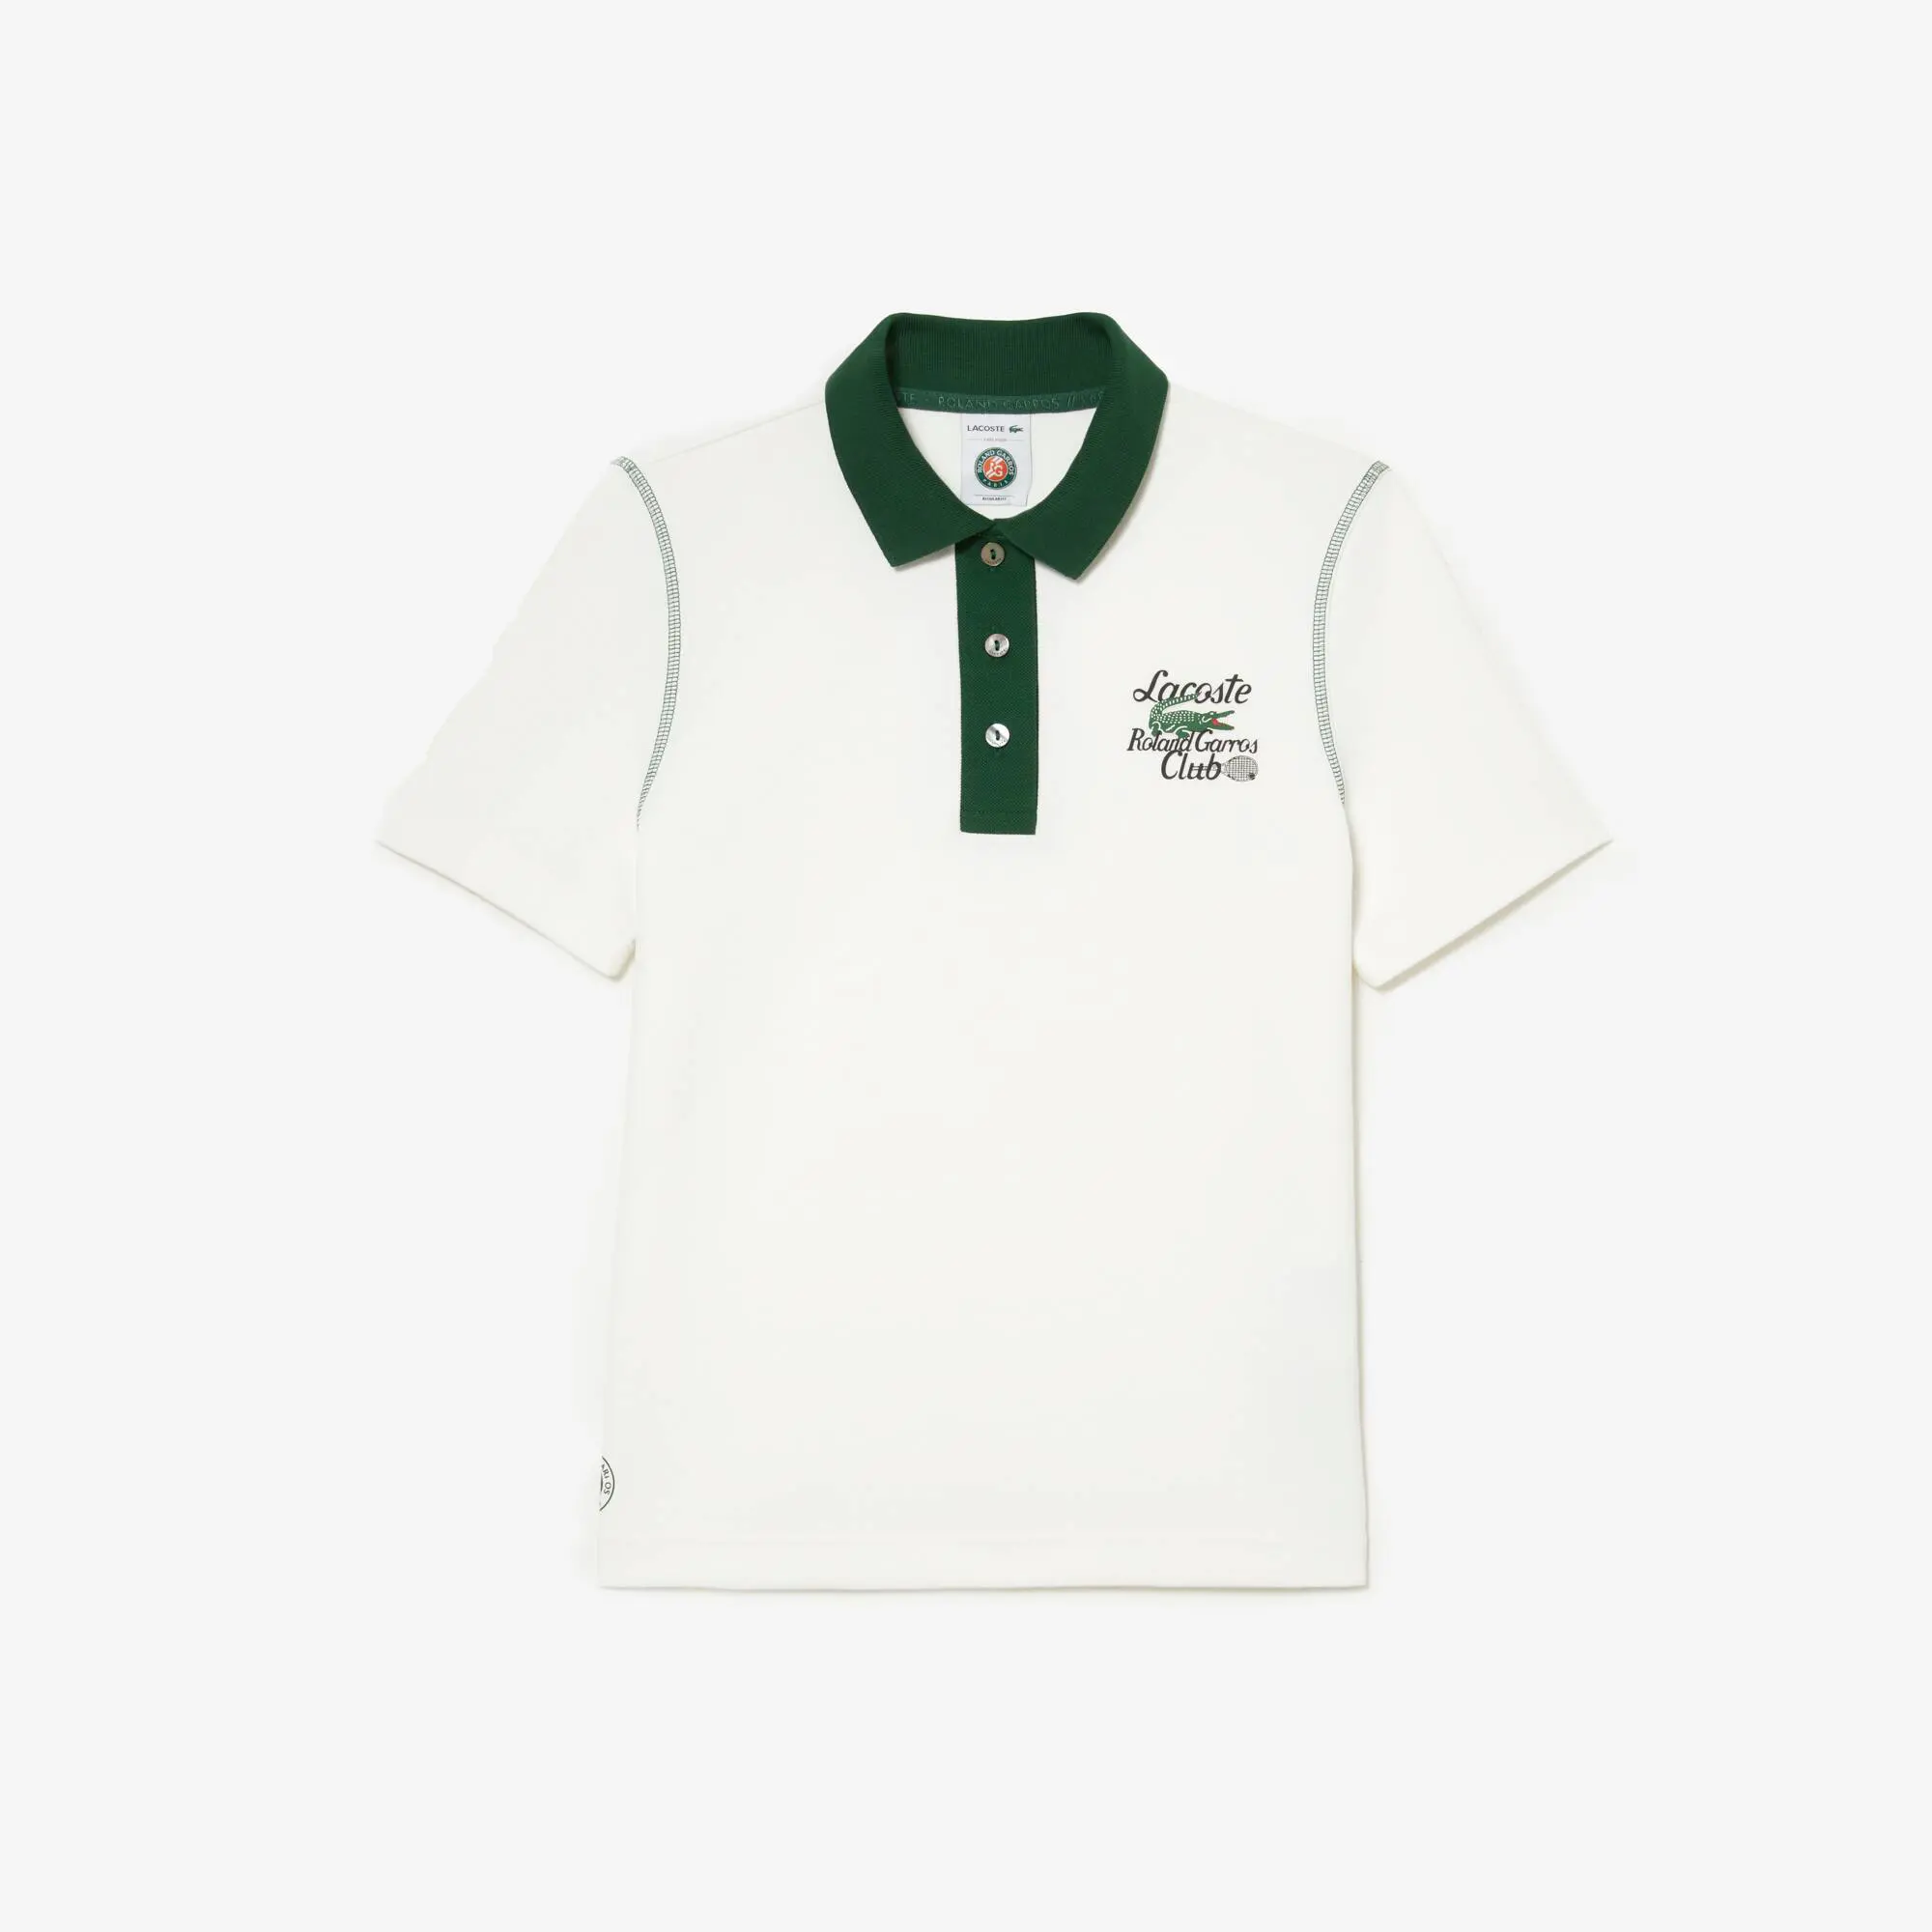 Lacoste Women’s Lacoste Sport Roland Garros Edition Cotton Piqué Polo Shirt. 2